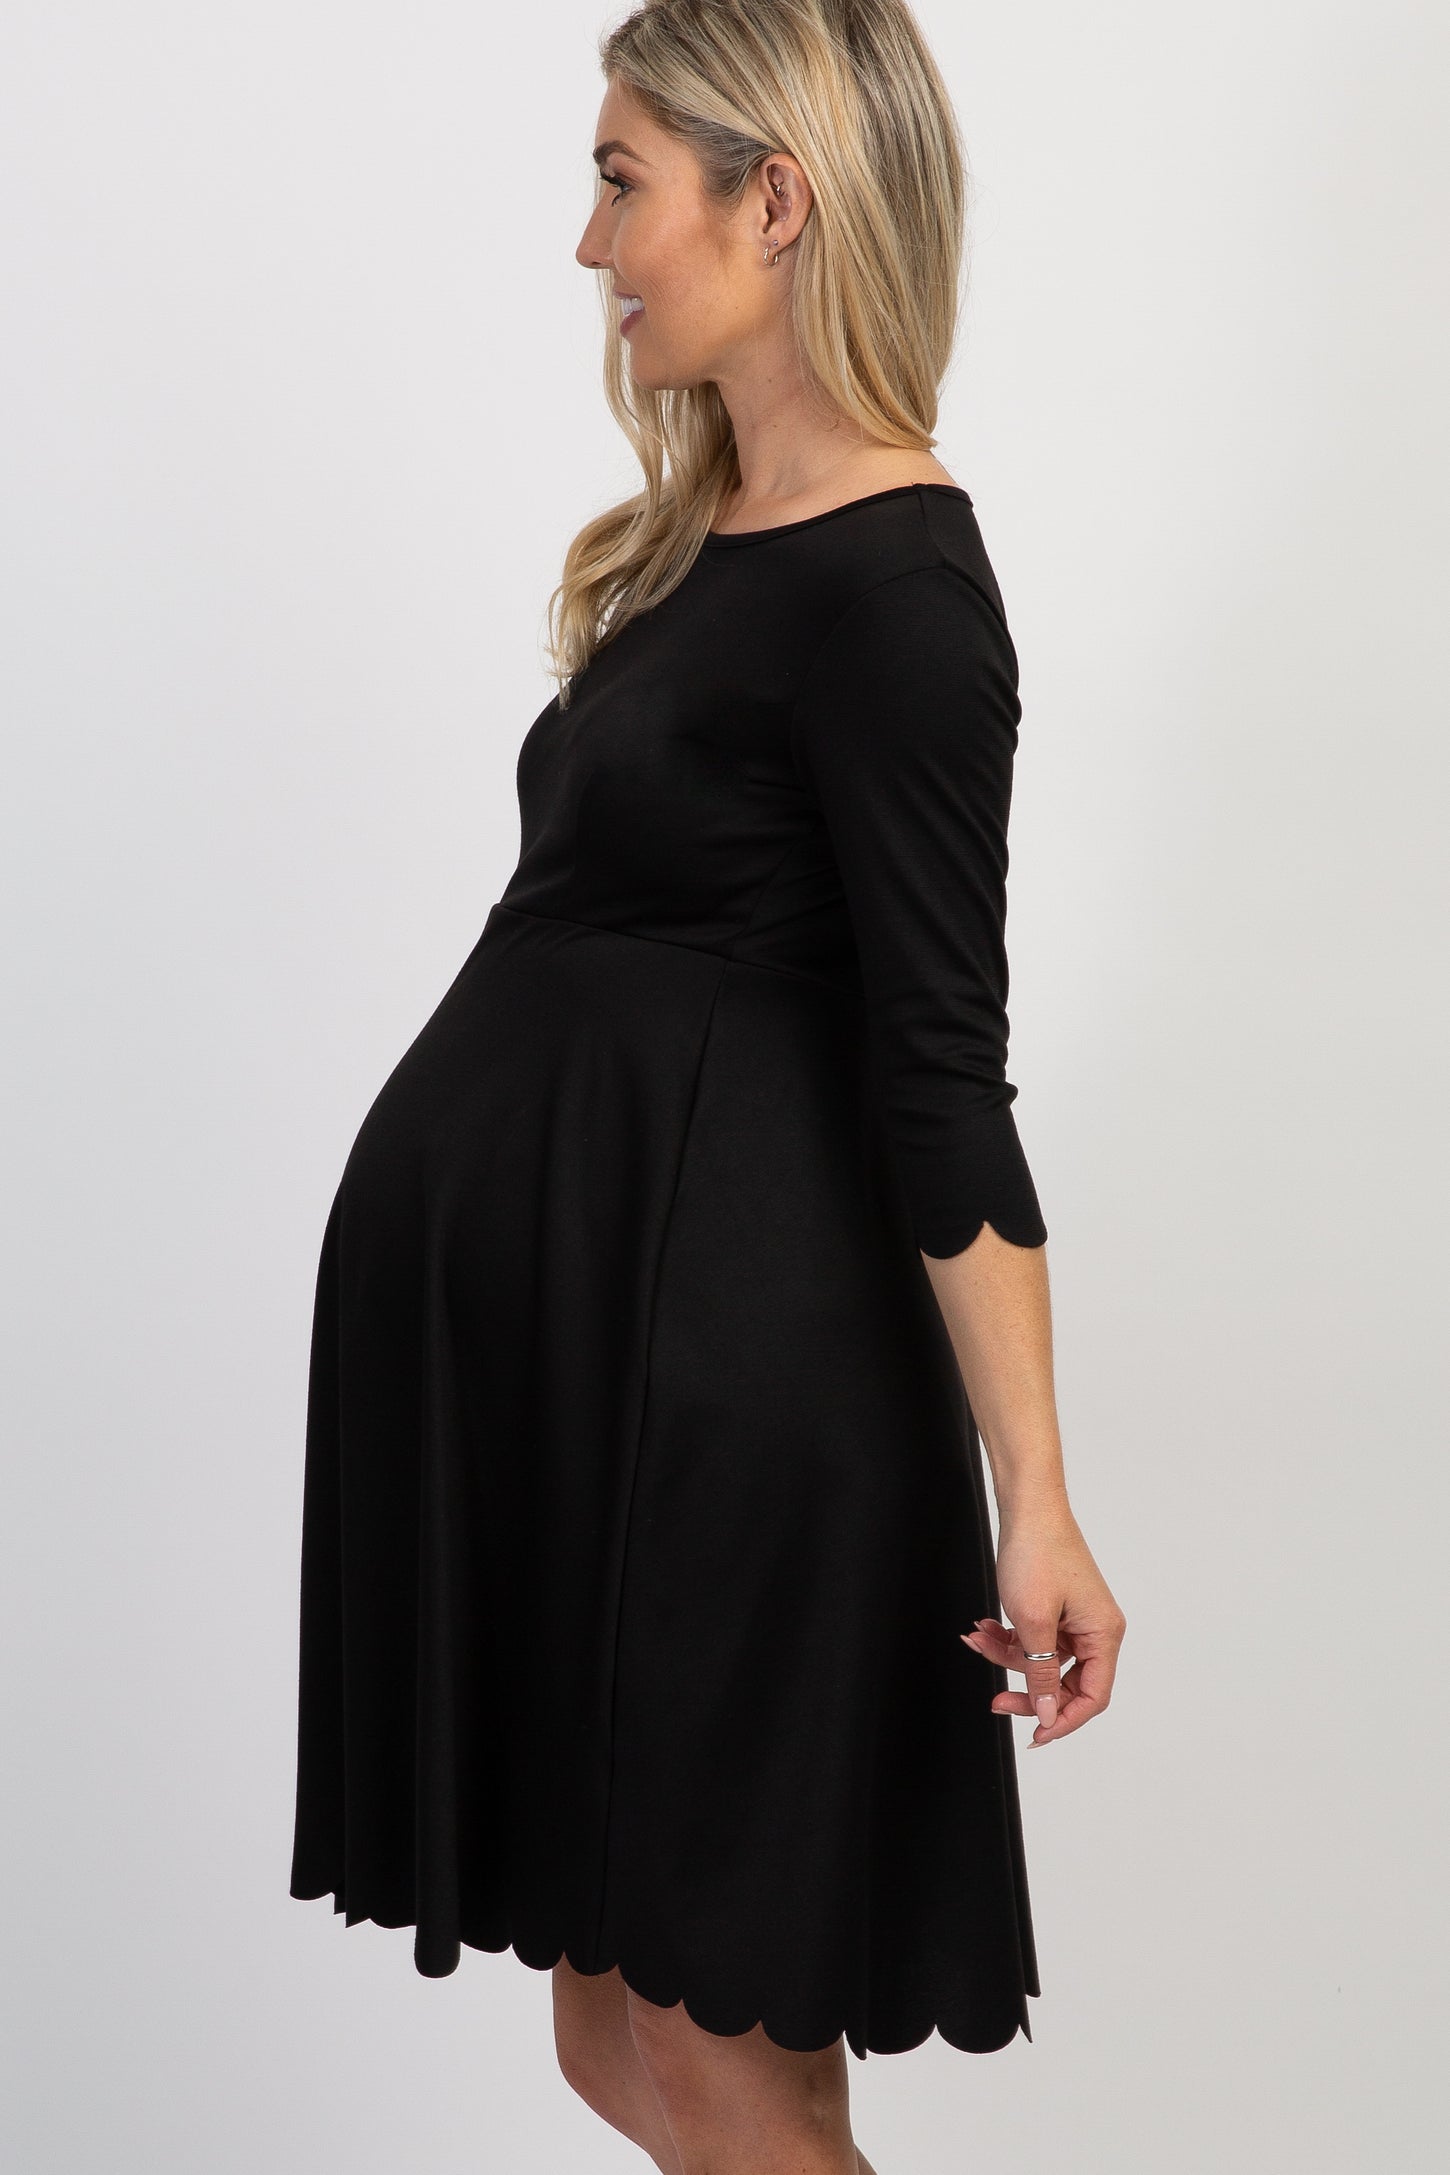 PinkBlush Black Solid Scalloped Hem Maternity Dress